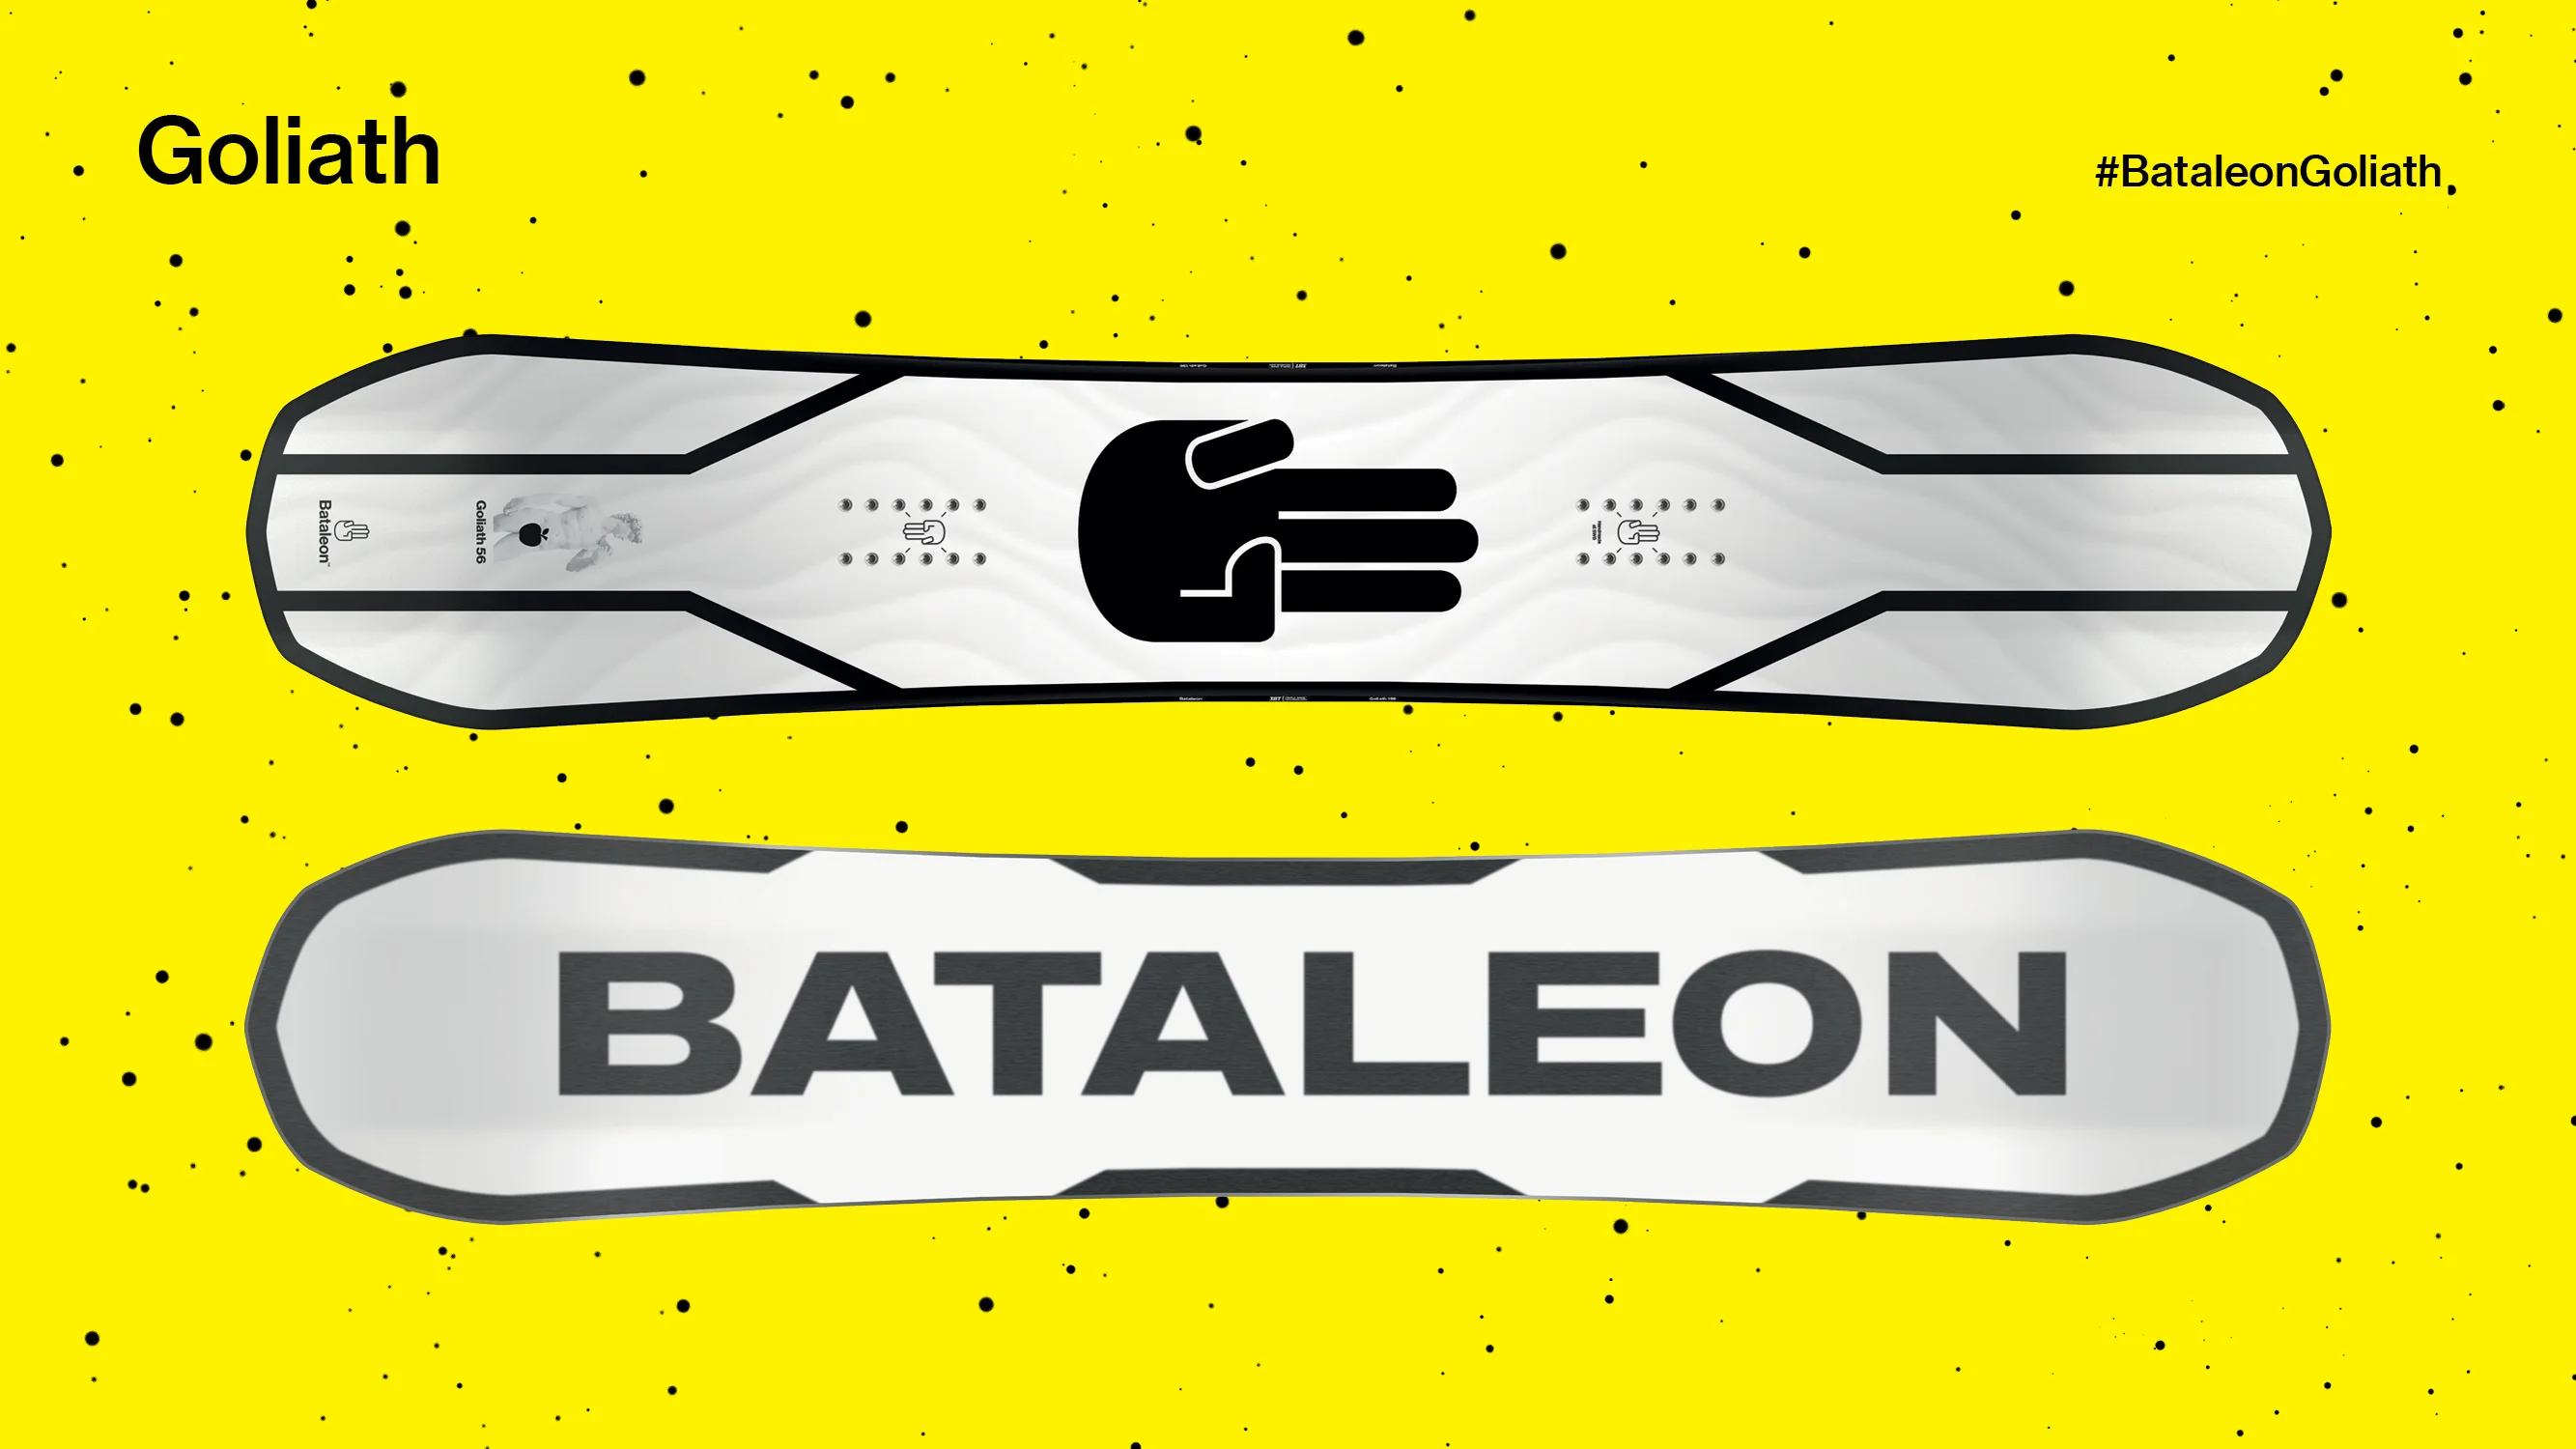 20/21 Bataleon Goliath